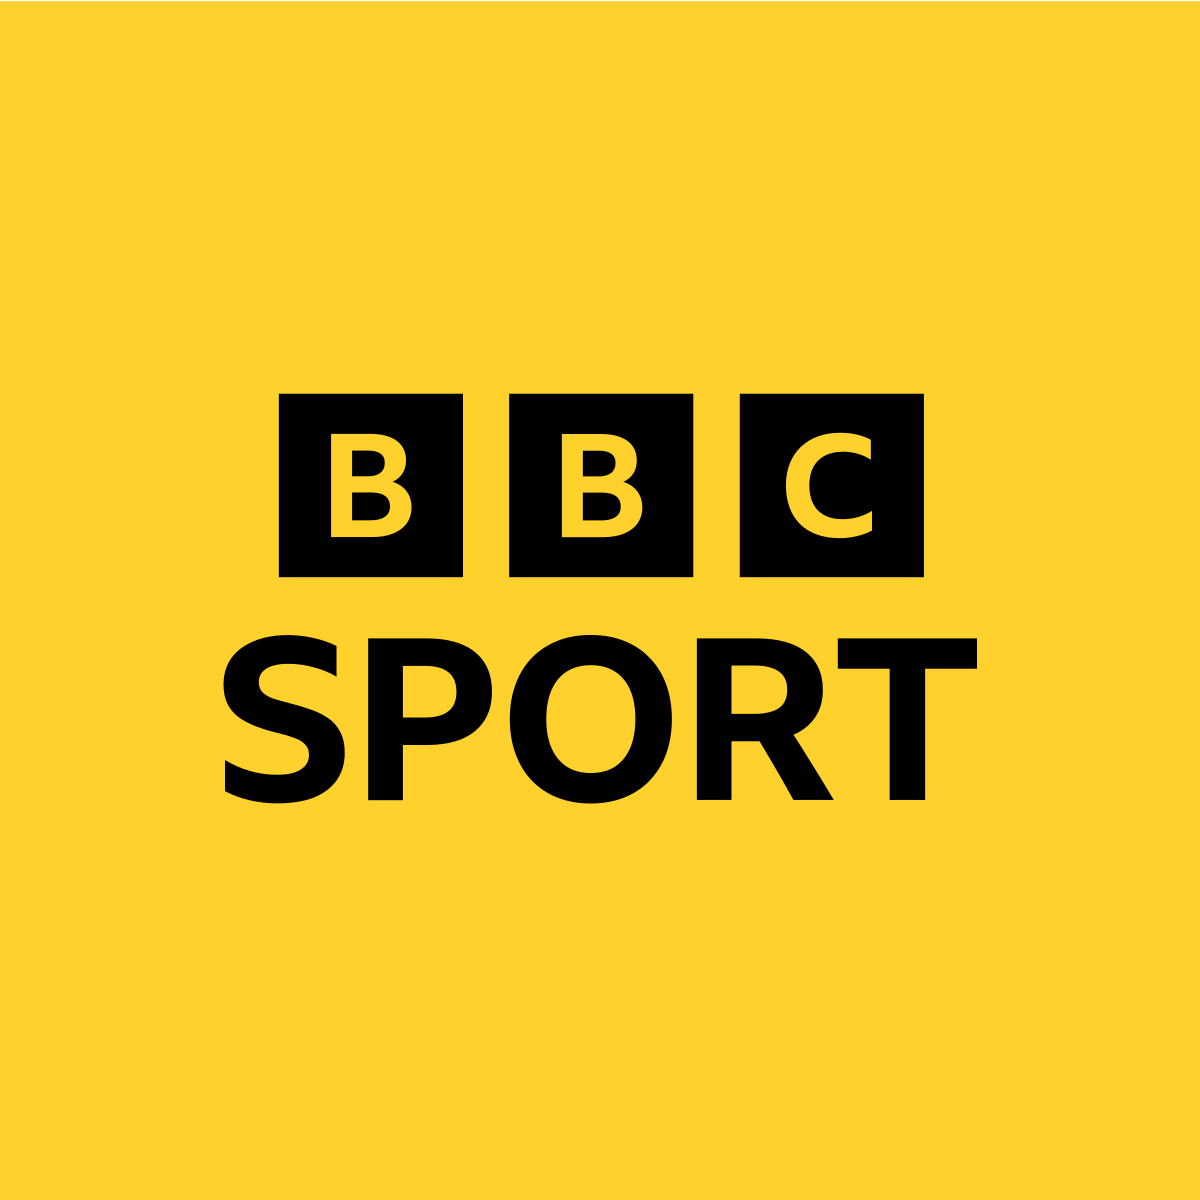 bbc sport logo